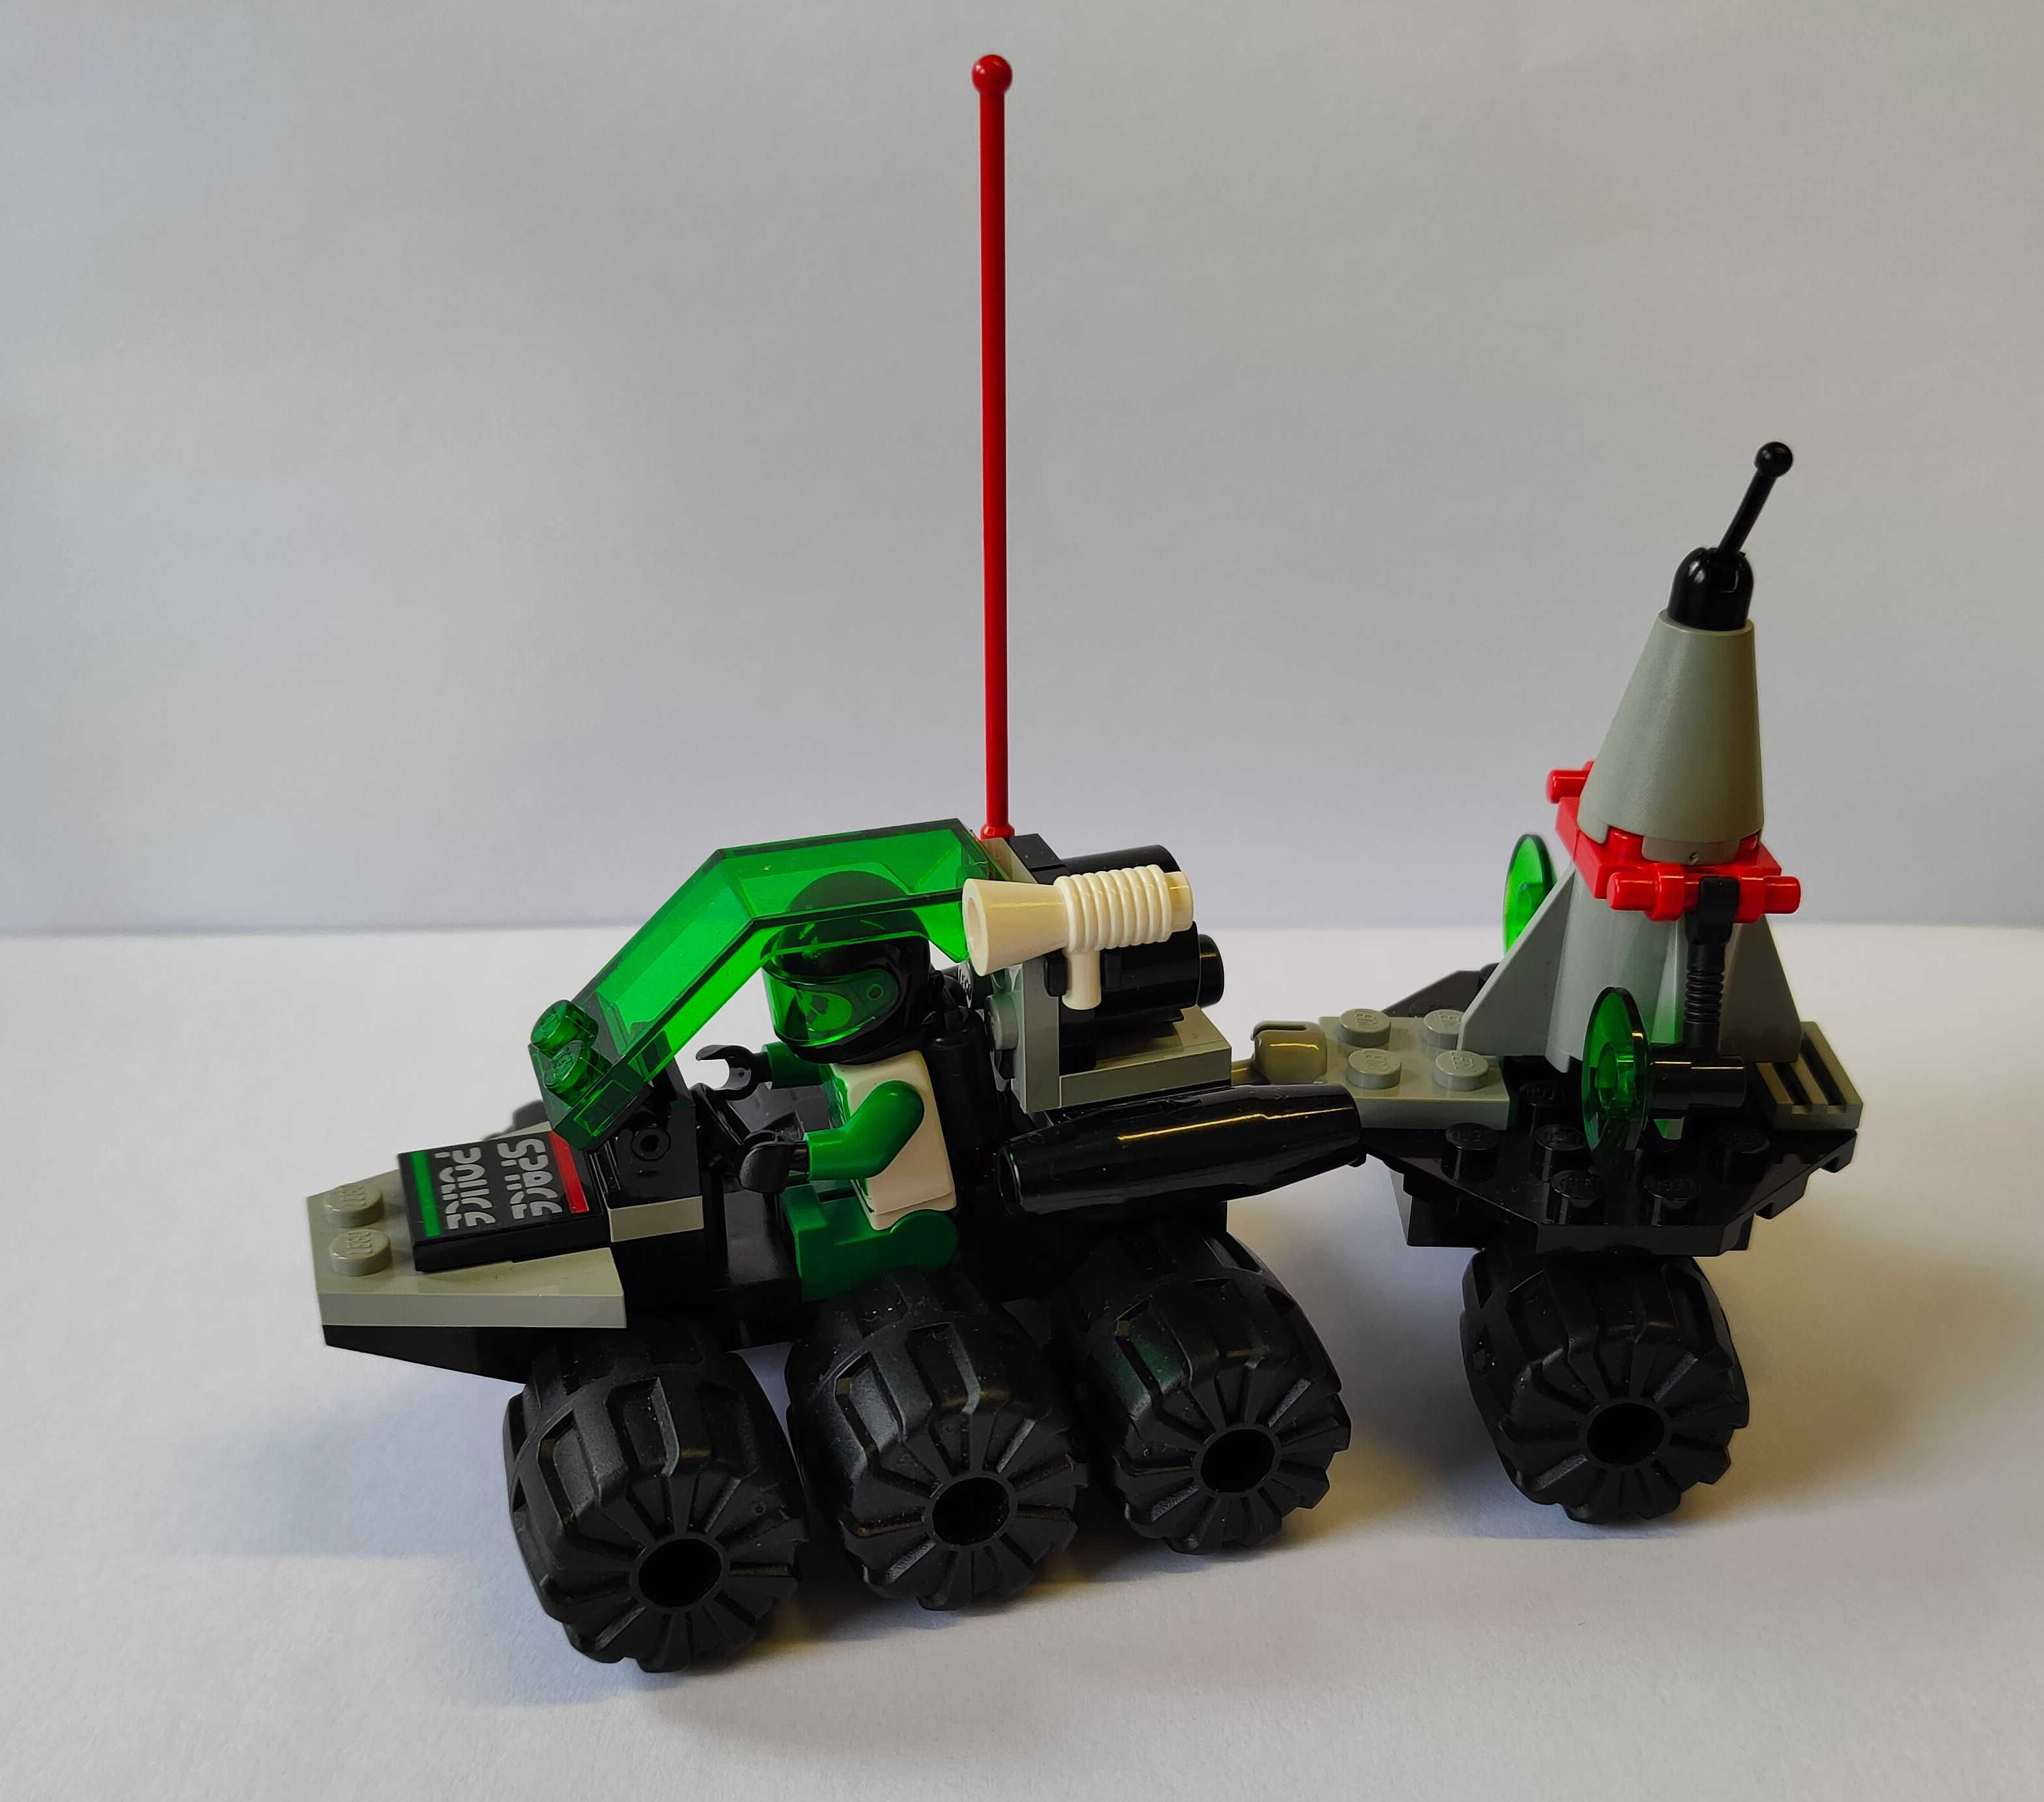 LEGO SPACE POLICE II - 6852 - Sonar Security